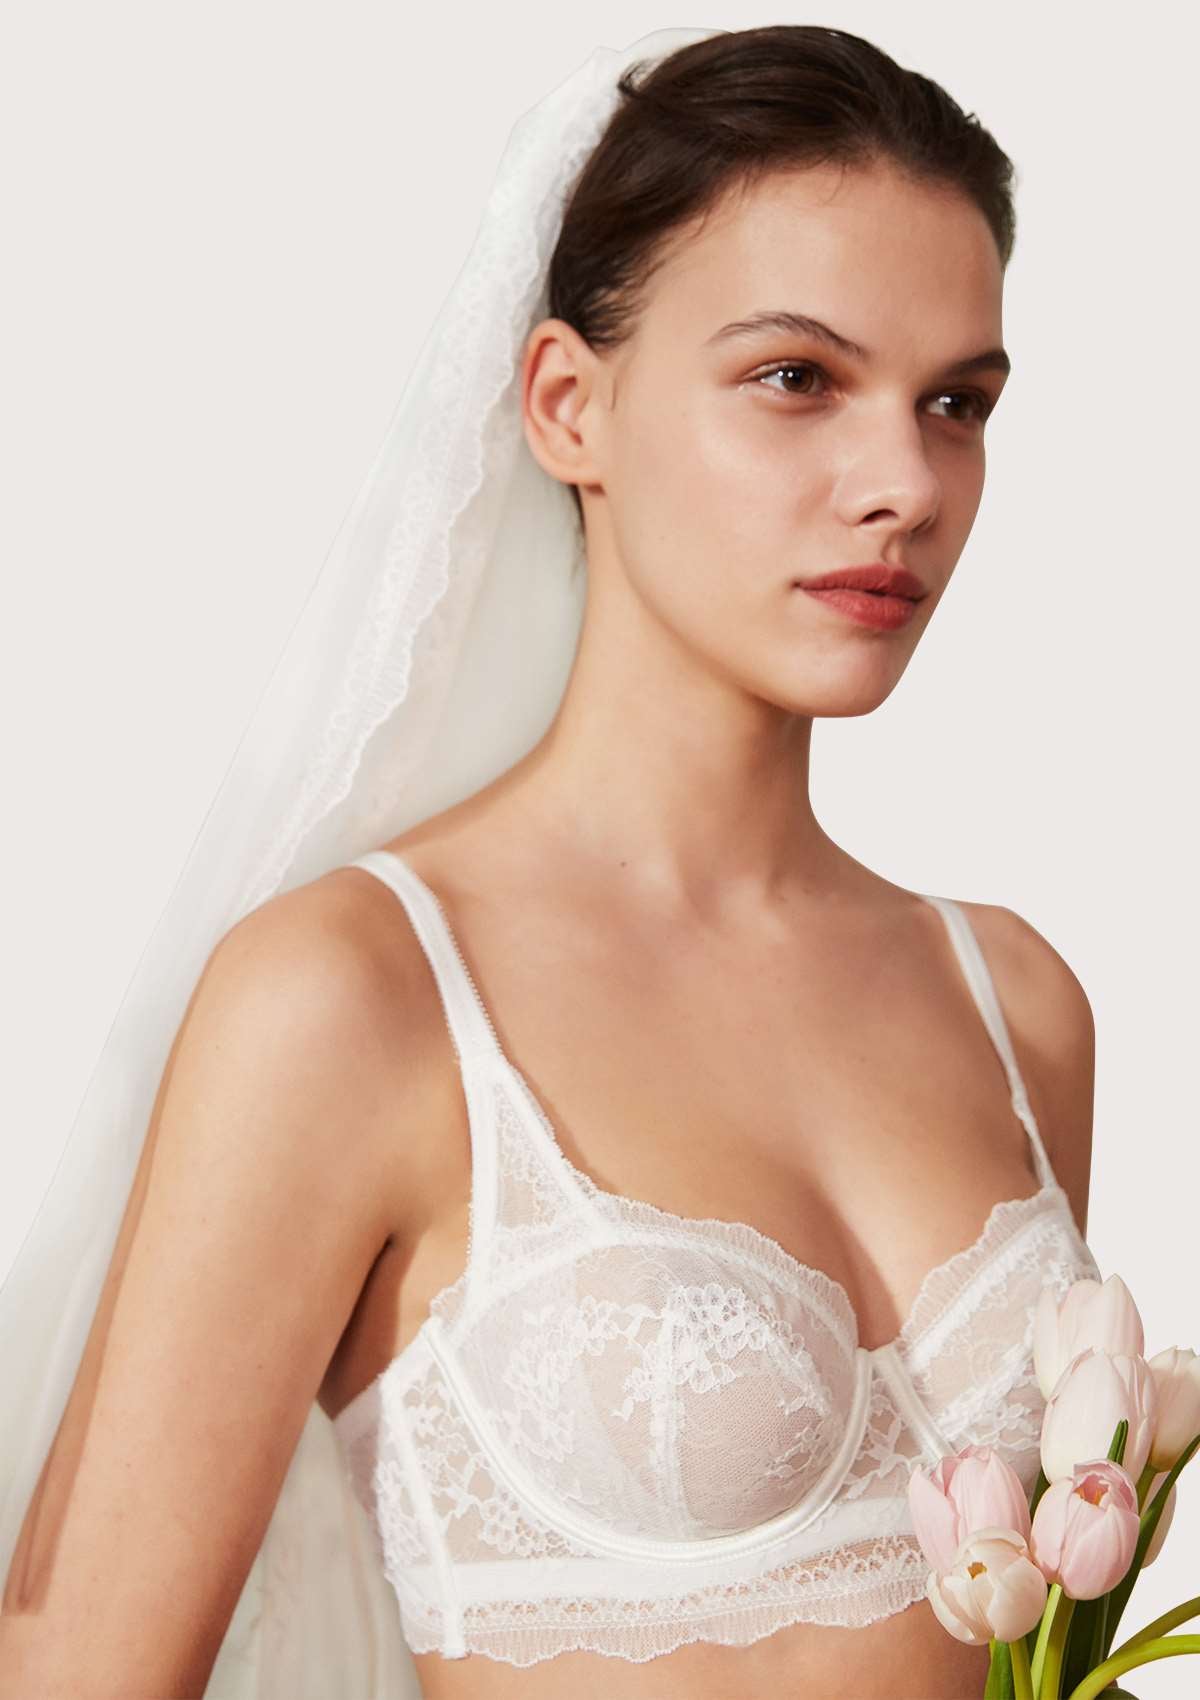 HSIA Floral Lace Unlined Bridal Romantic Balconette Bra Panty Set  - White / 40 / DD/E